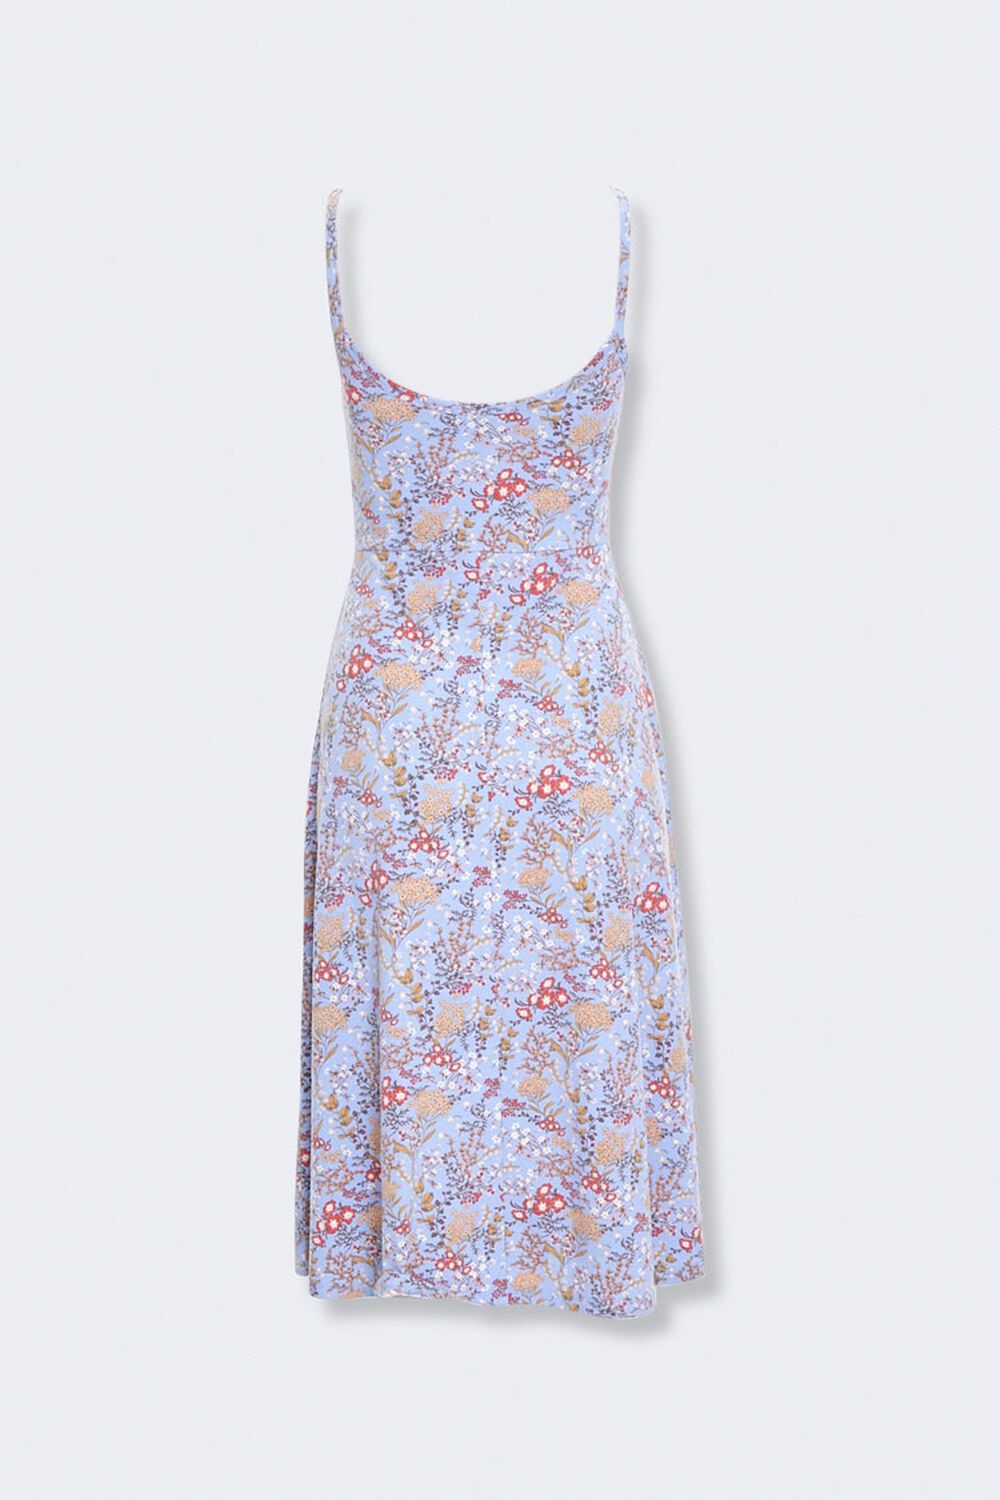 BLUE/MULTI Floral Print Dress, image 3